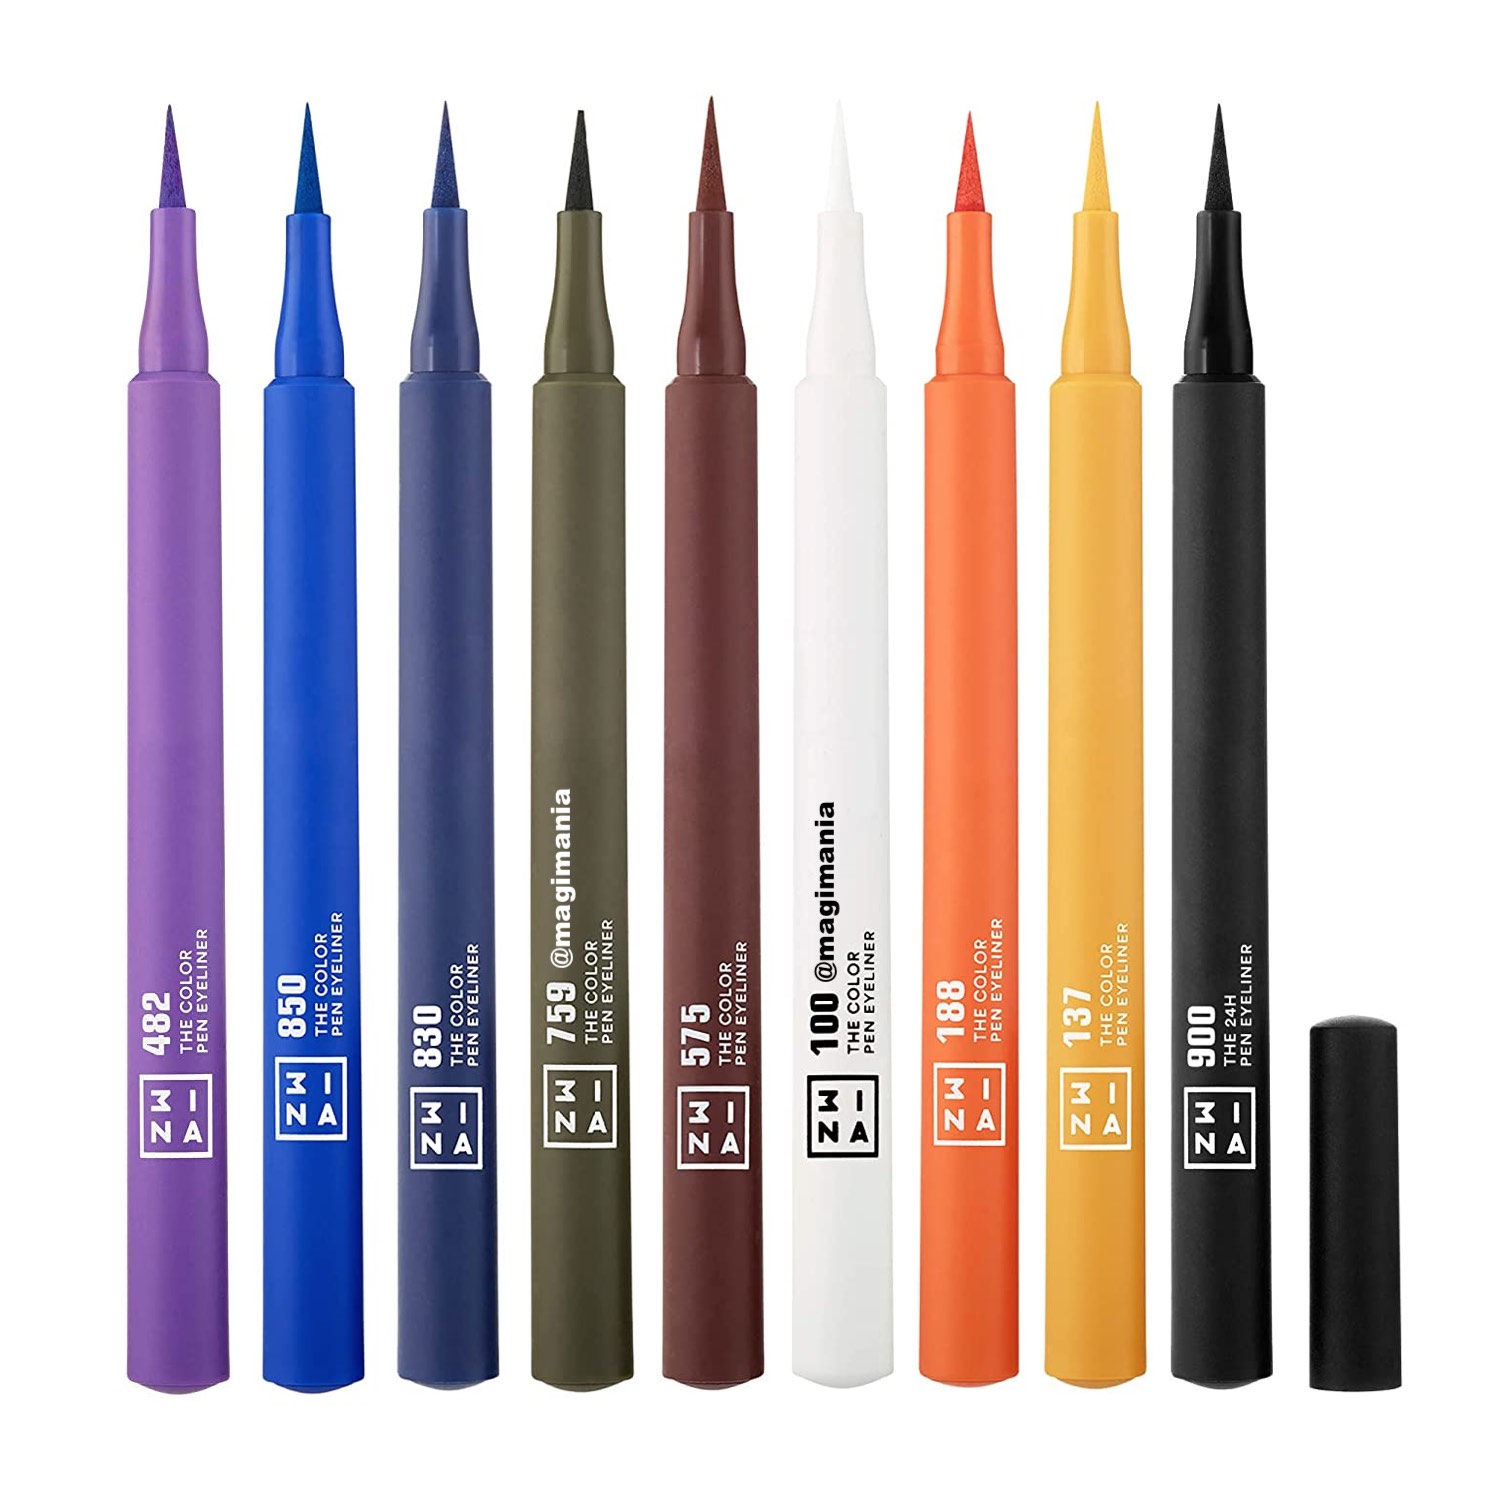 3INA The Color Pen Felt Tip Eyeliner Filzspitze bunter Lidstrich kaufen Deutschland bestellen Erfahrungen Review